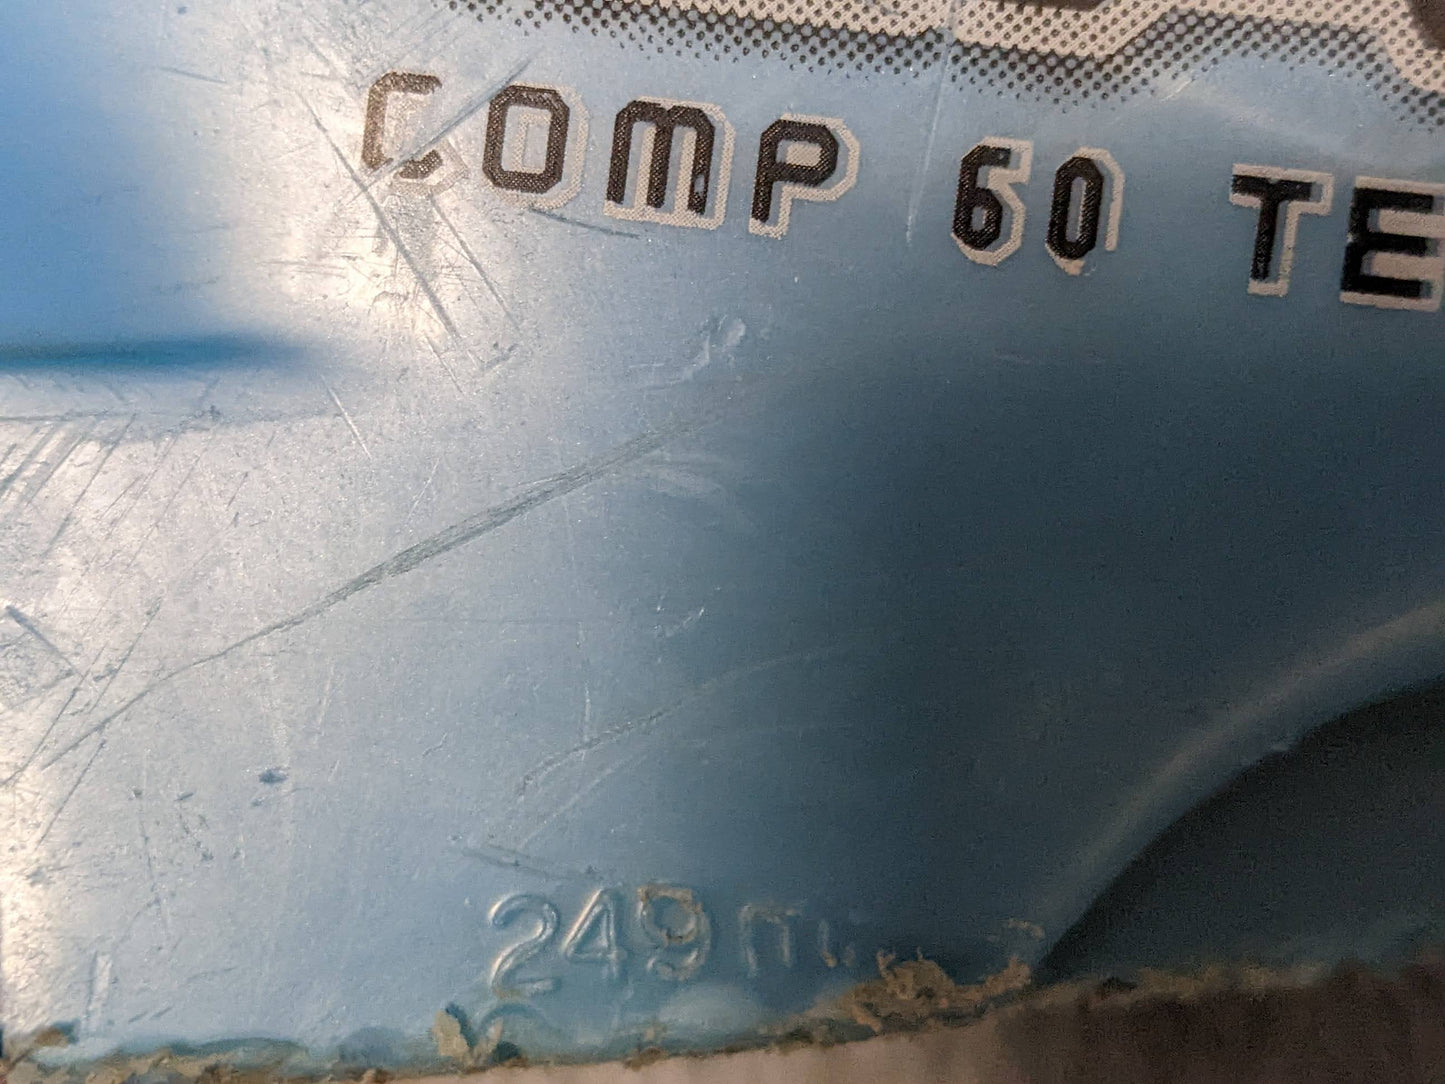 Lange Comp 60 Team Alpine Ski Boots Size 20.5 Color Blue Condition Used